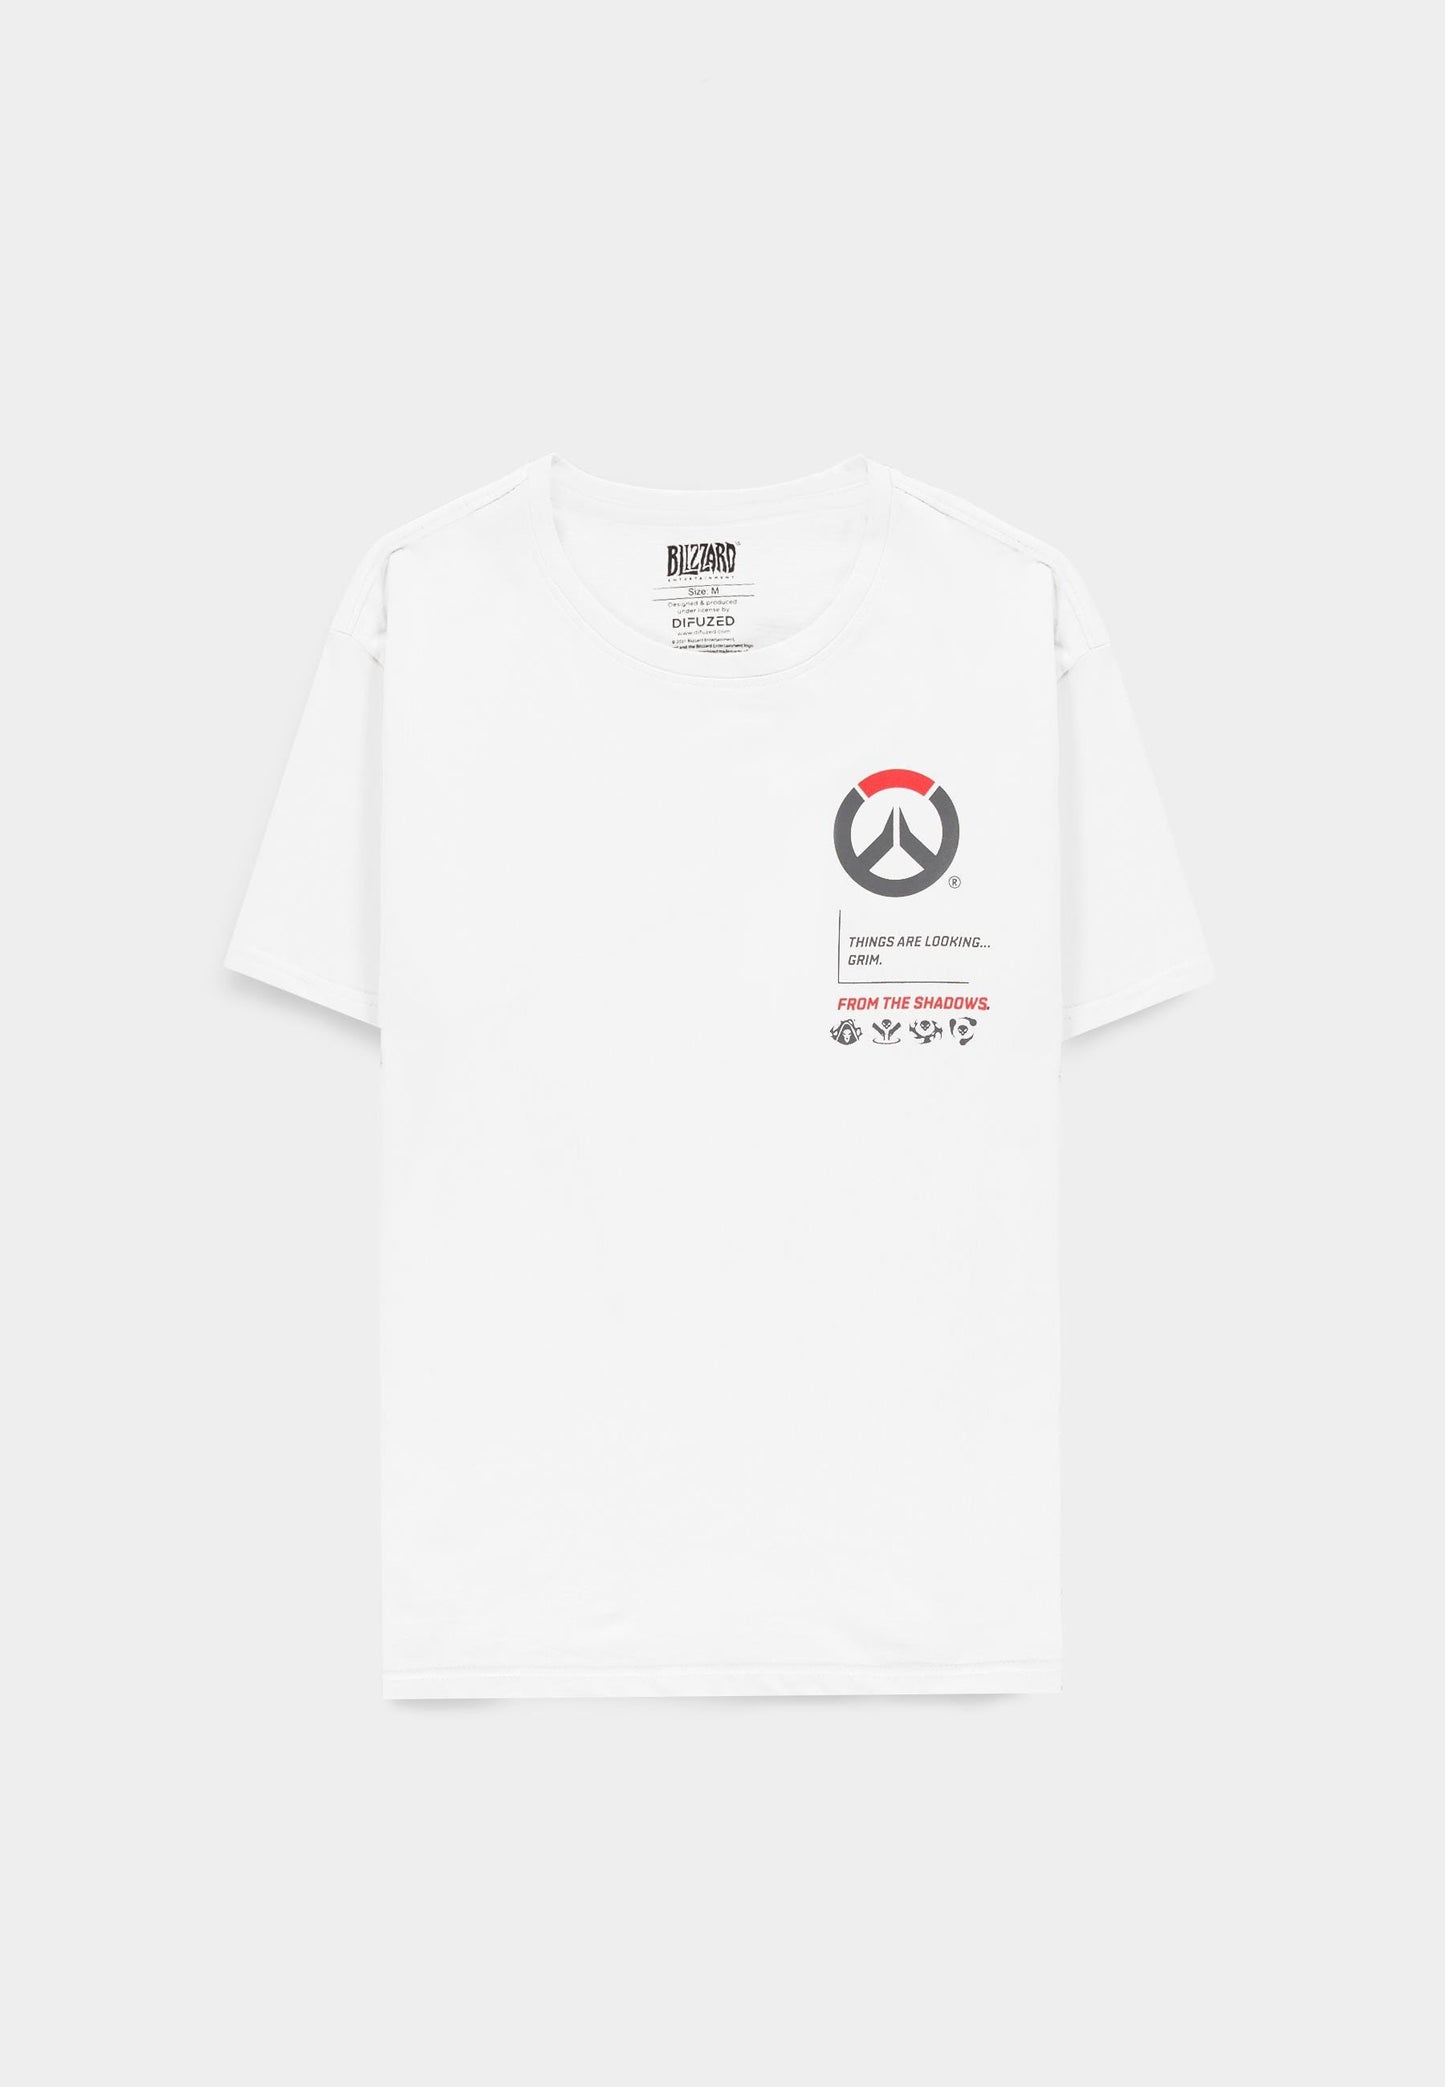 Overwatch - Reaper Guns - Men's Short Sleeved T-shirt